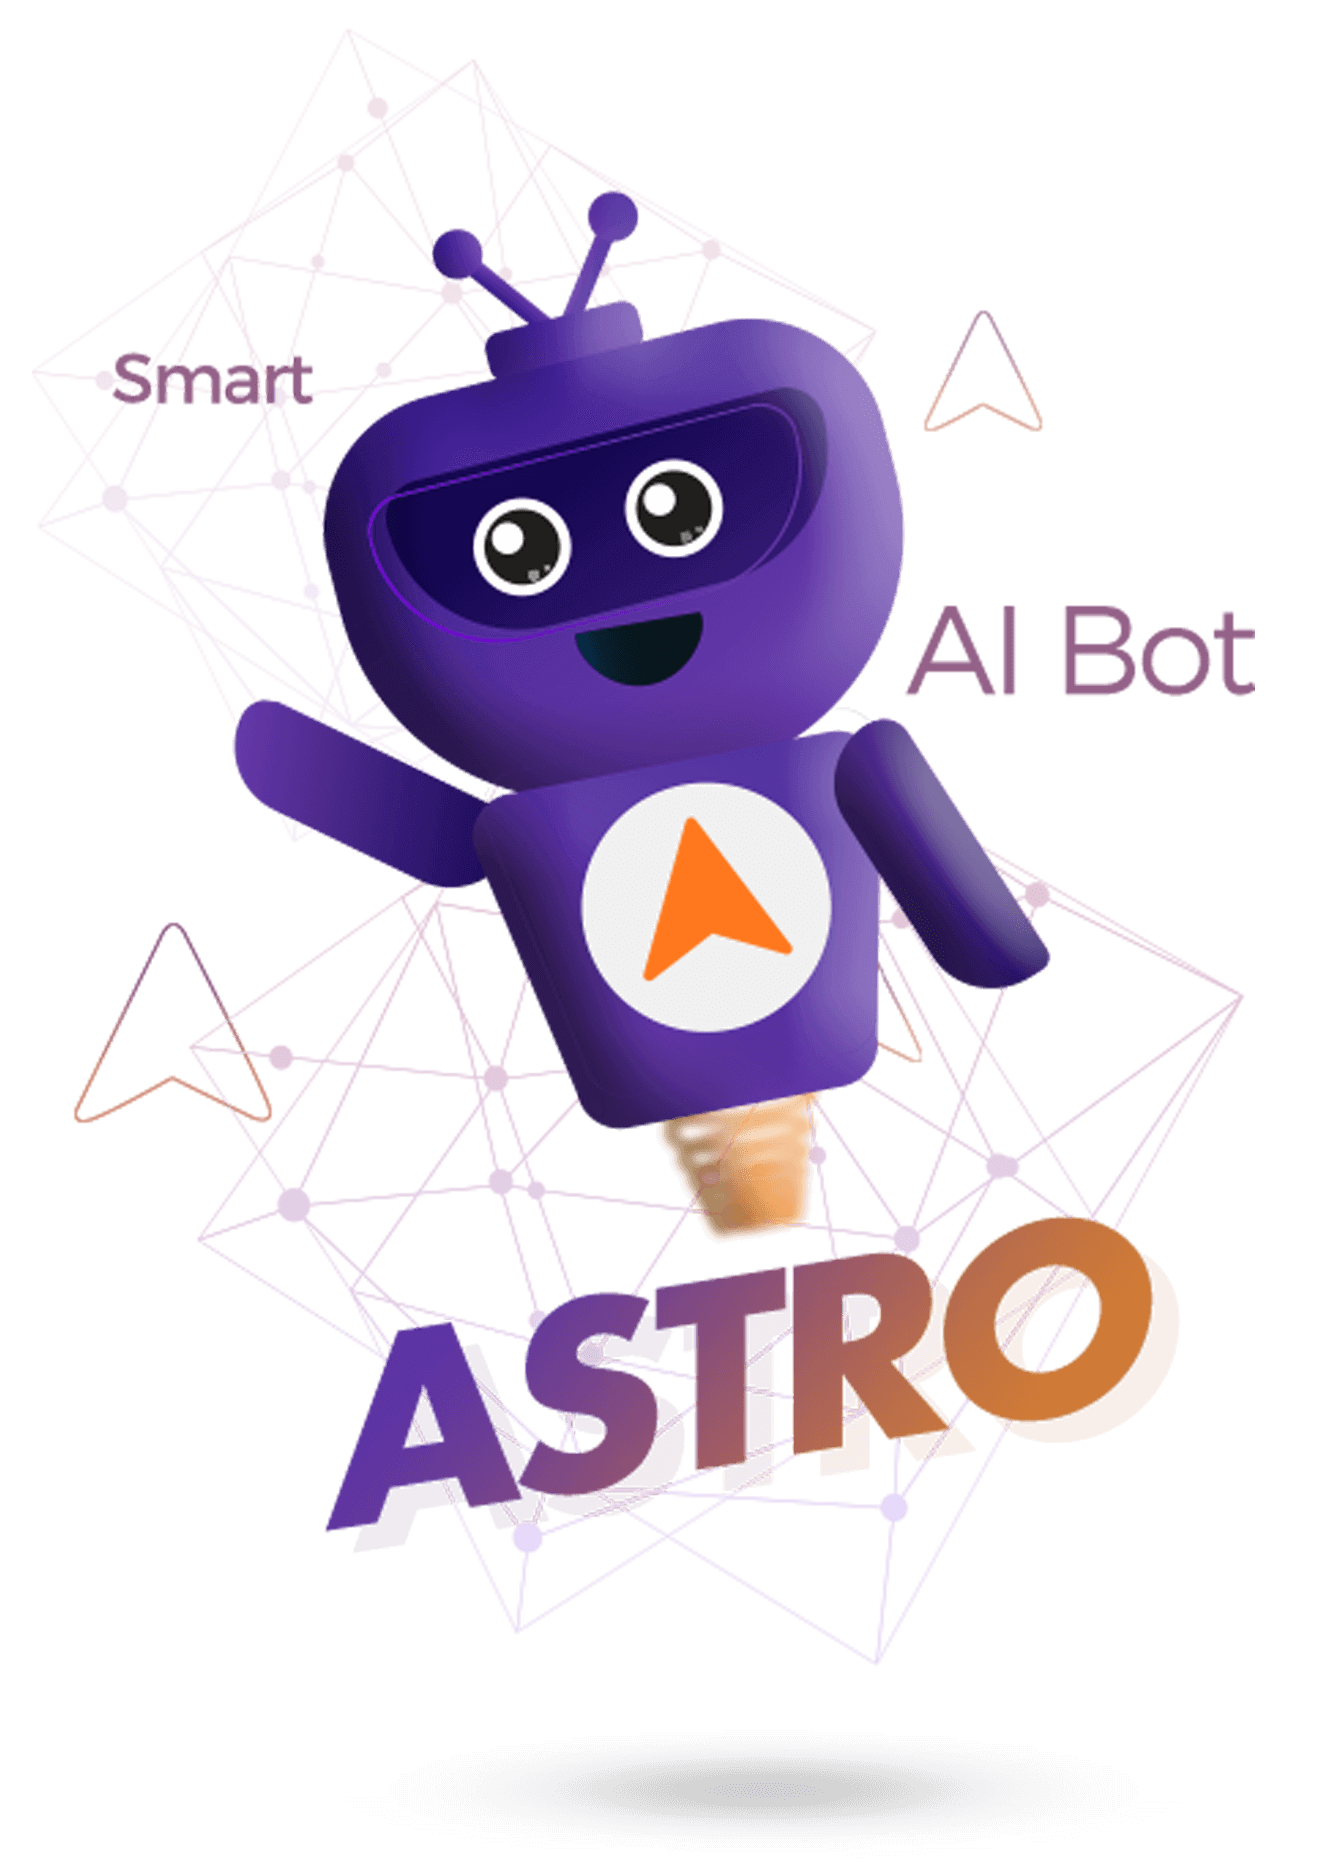 Amaze PXM's smart powered AI bot - Astro